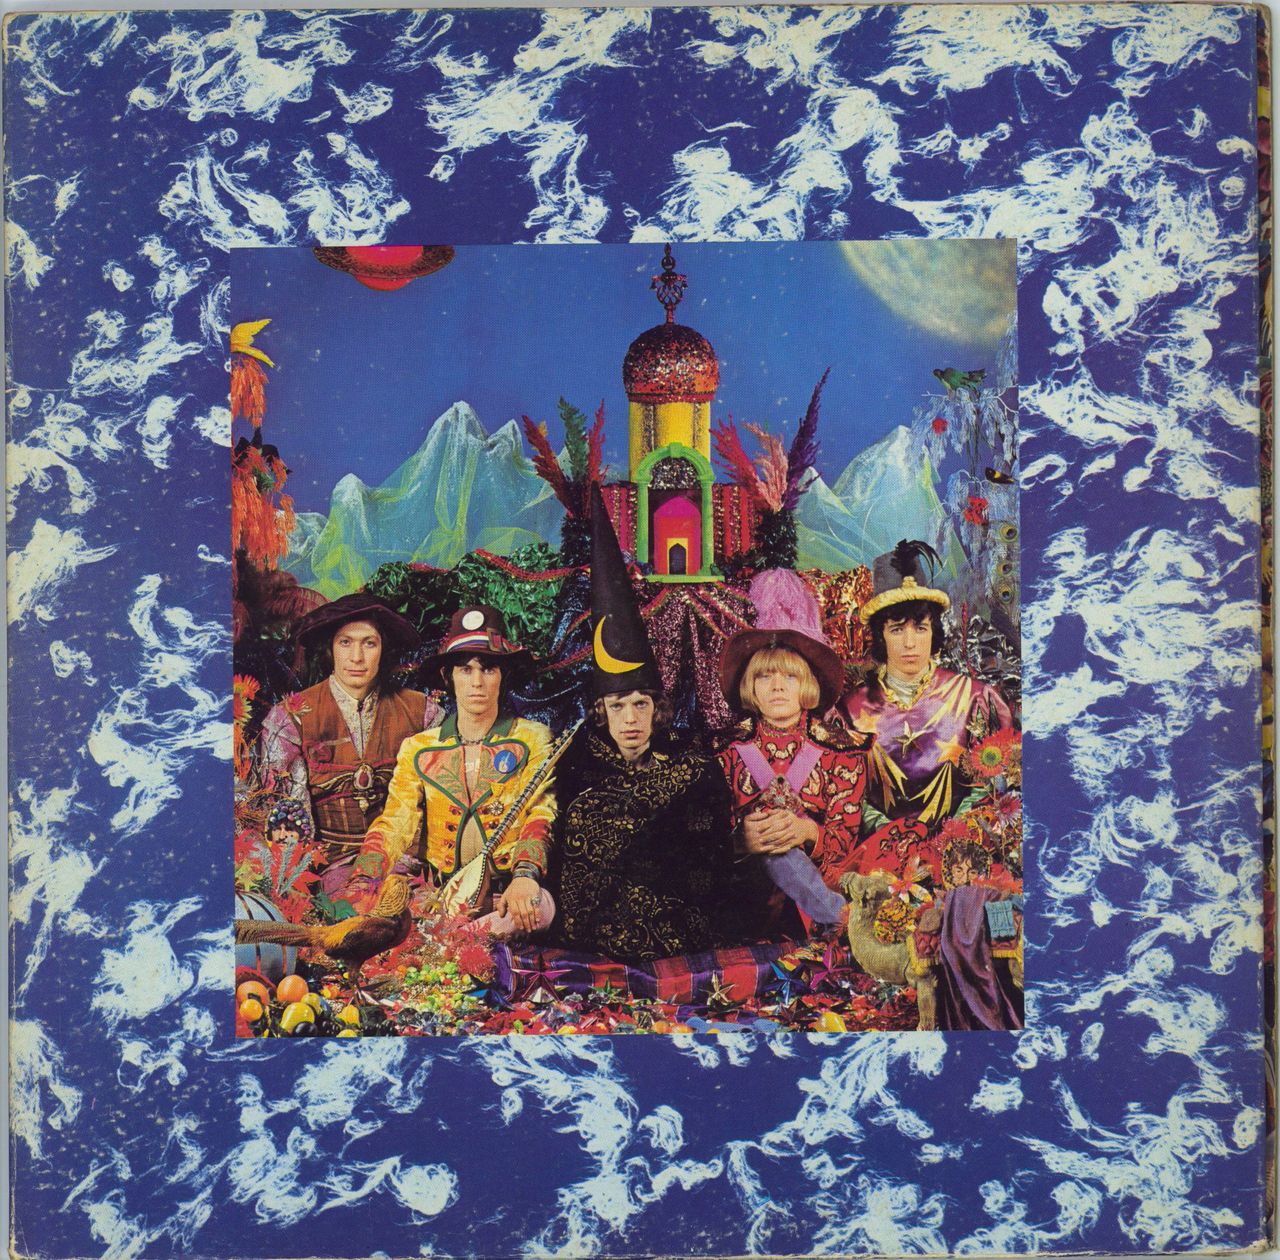 The Rolling Stones Their Satanic Majesties Request - 2nd Vinyl LP — RareVinyl.com